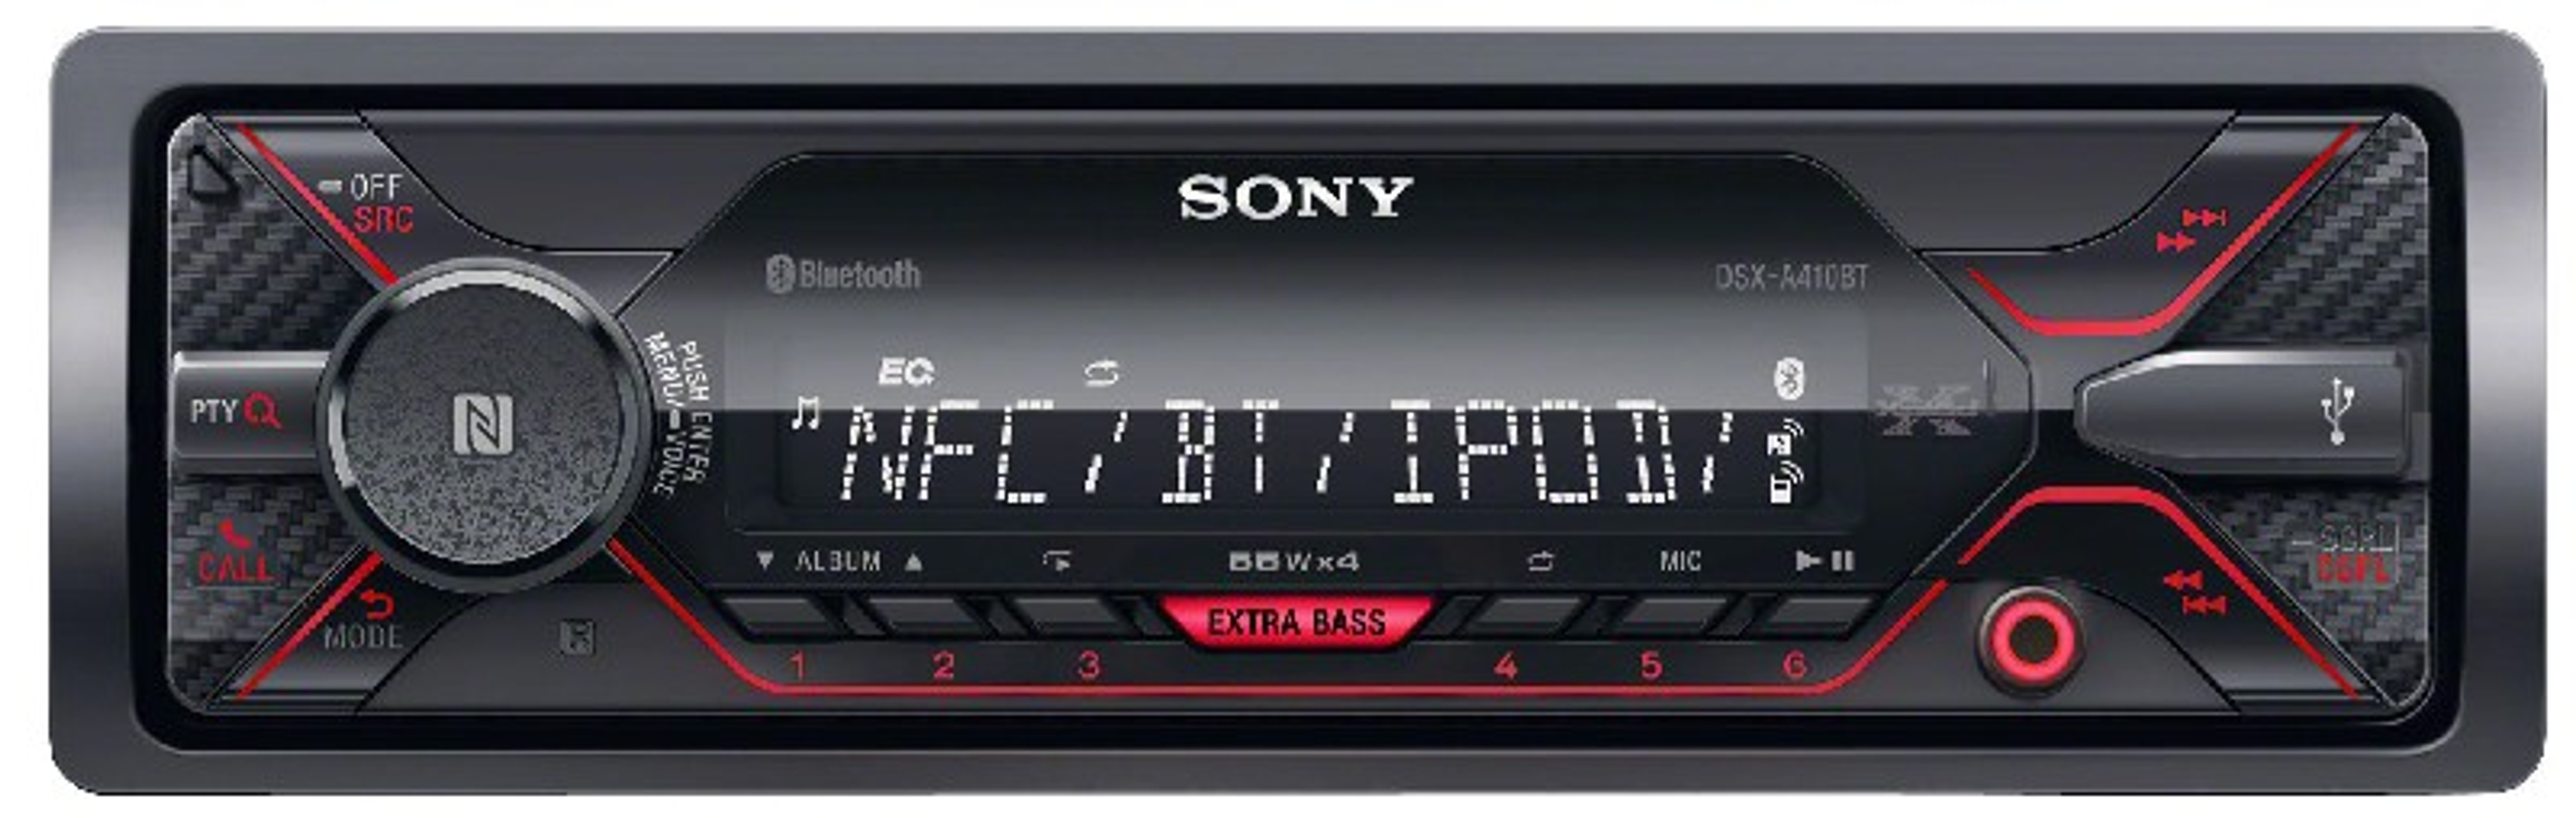 SONY DSX-A 410 BT Autoradio 55 1 Watt DIN